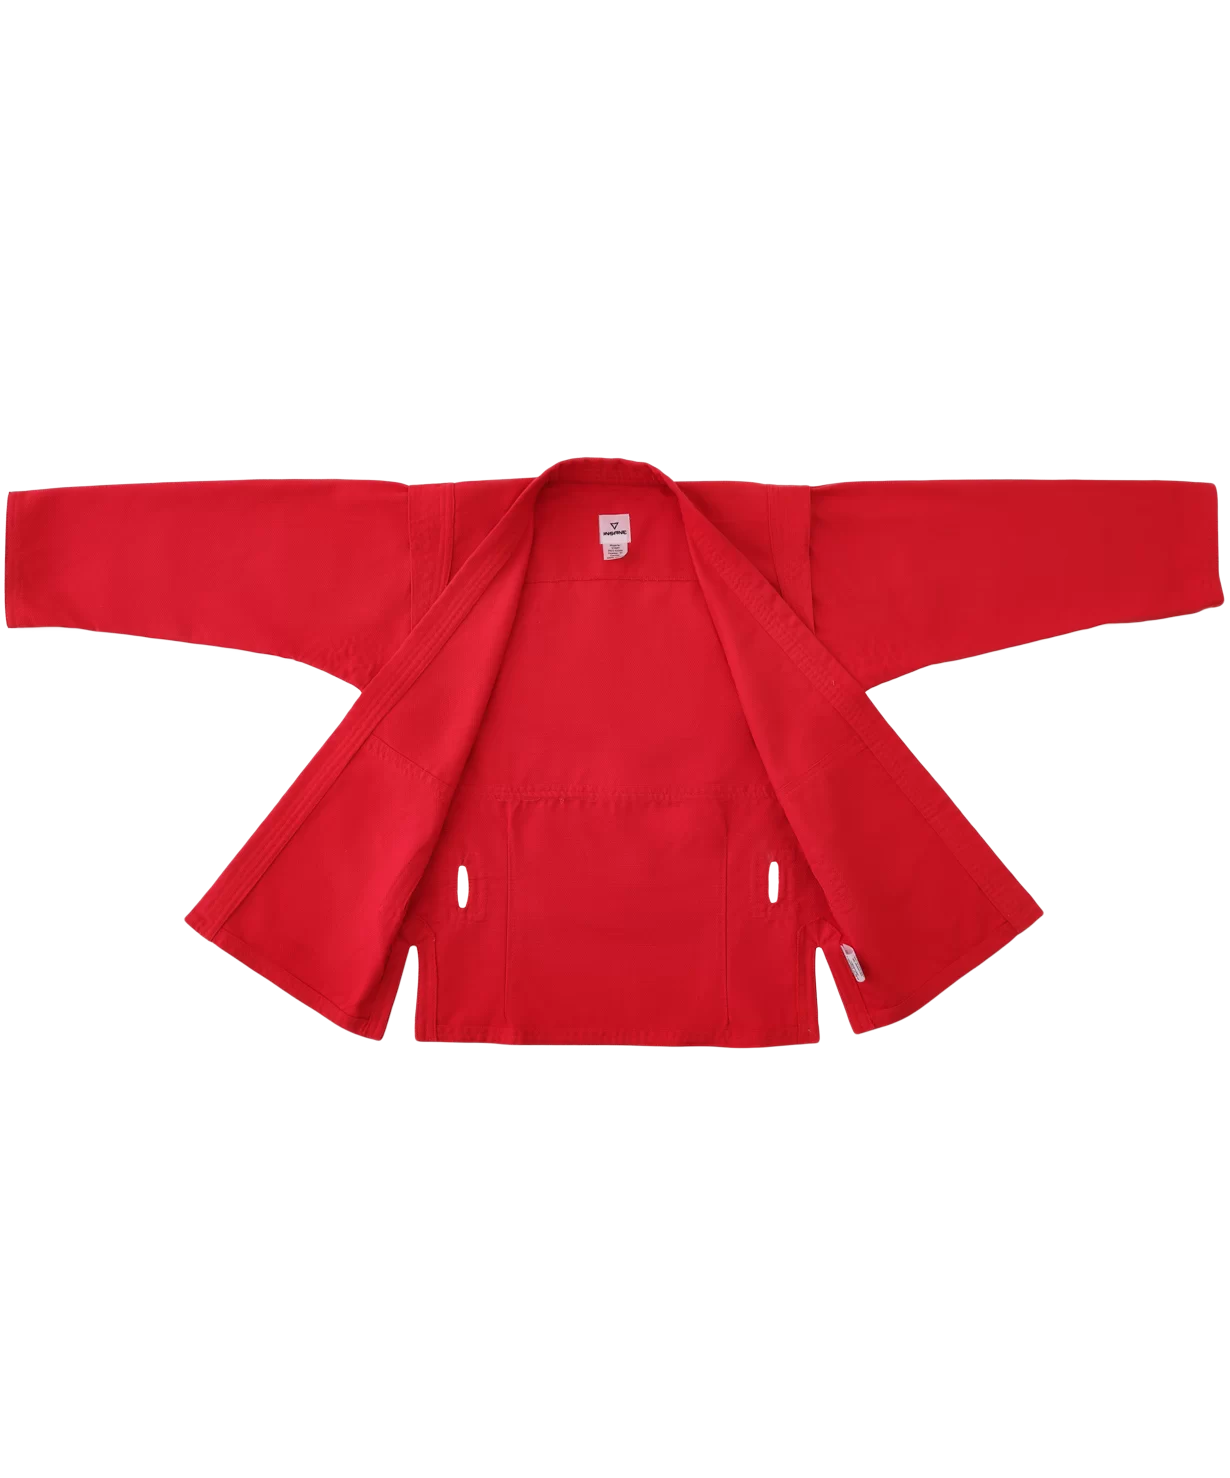 Фото Куртка для самбо START, хлопок, красный, 52-54 Insane со склада магазина СпортЕВ